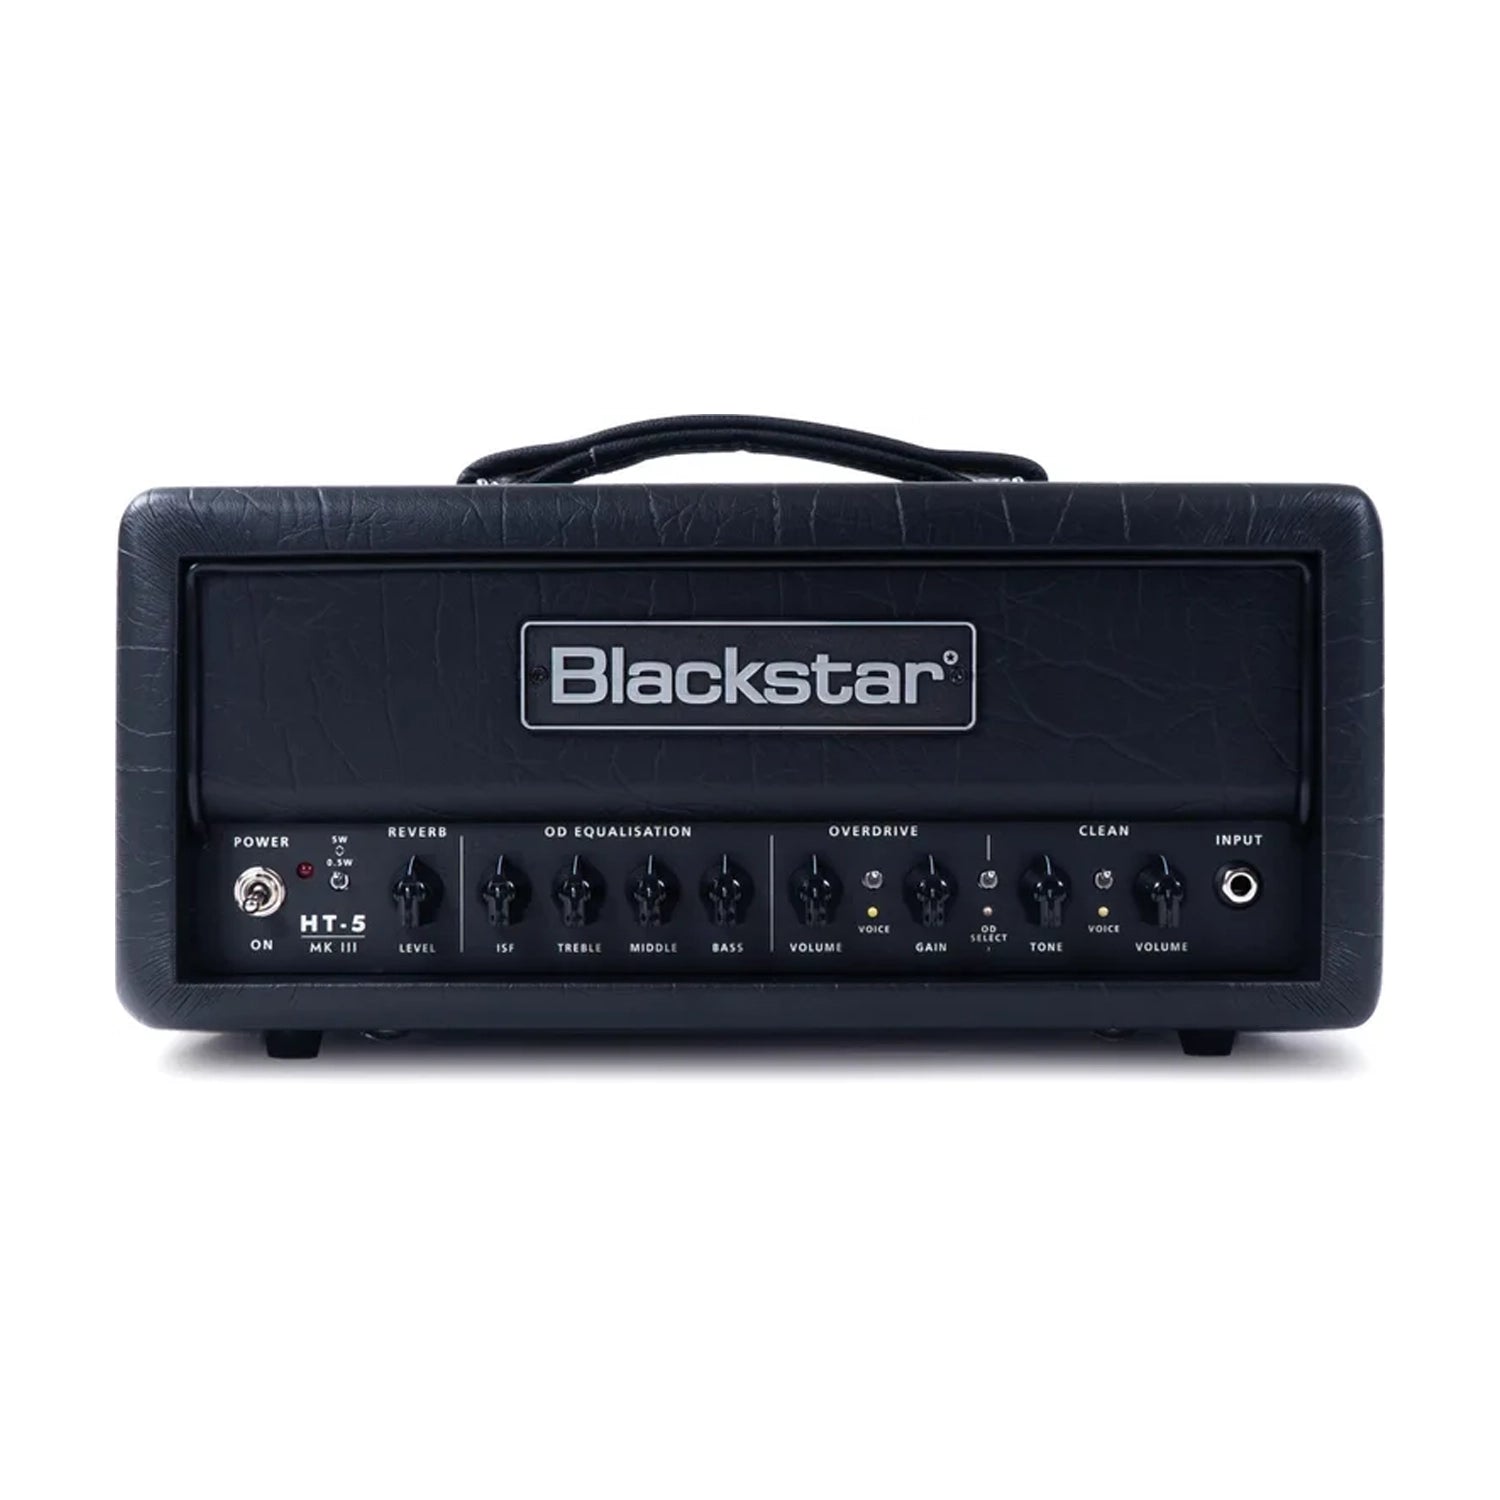 Blackstar HT-5RH MK III 5-watt Tube Amplifier Head